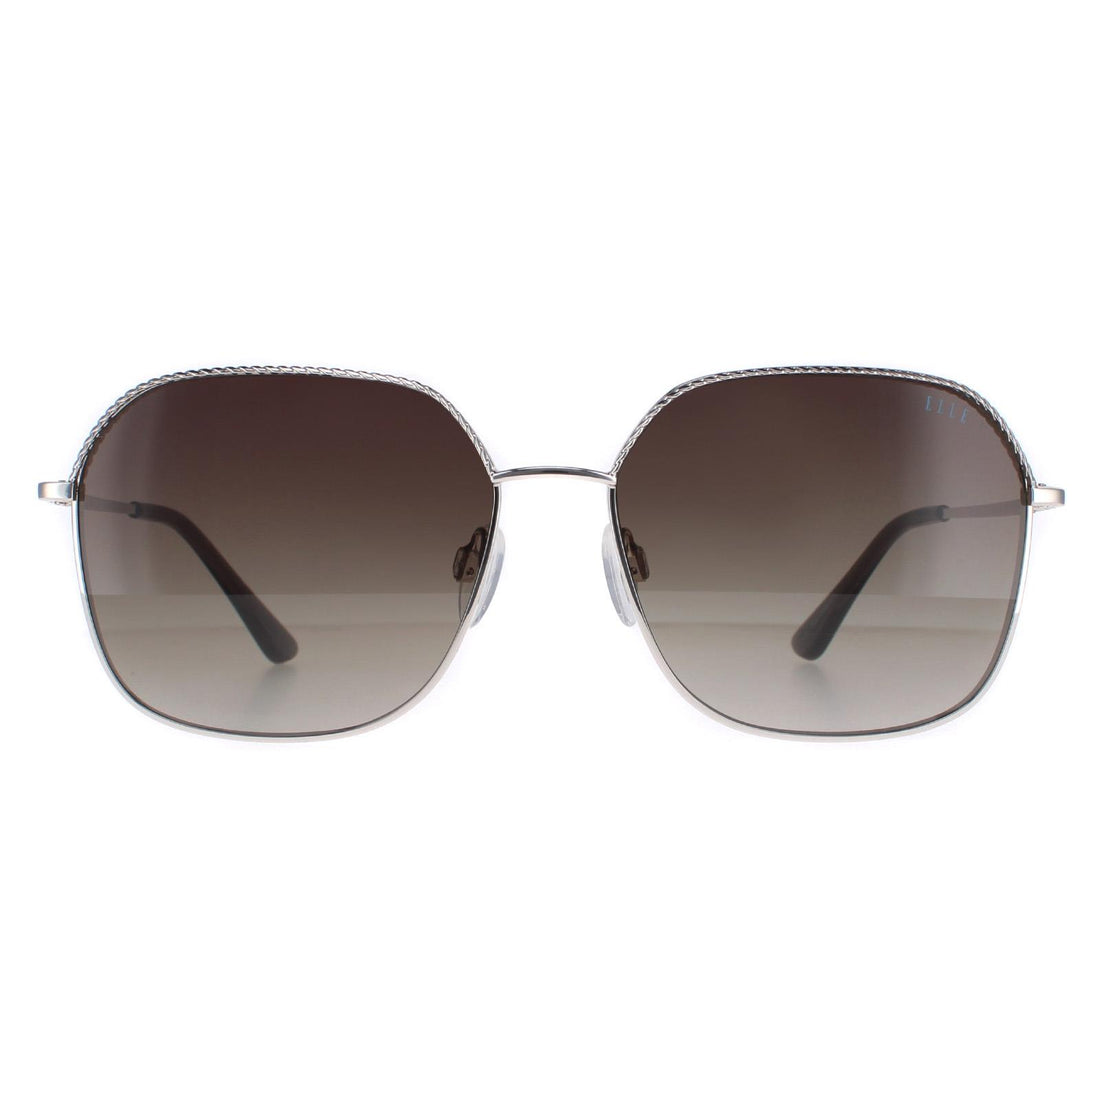 Elle 14906 Sunglasses Silver / Grey Gradient